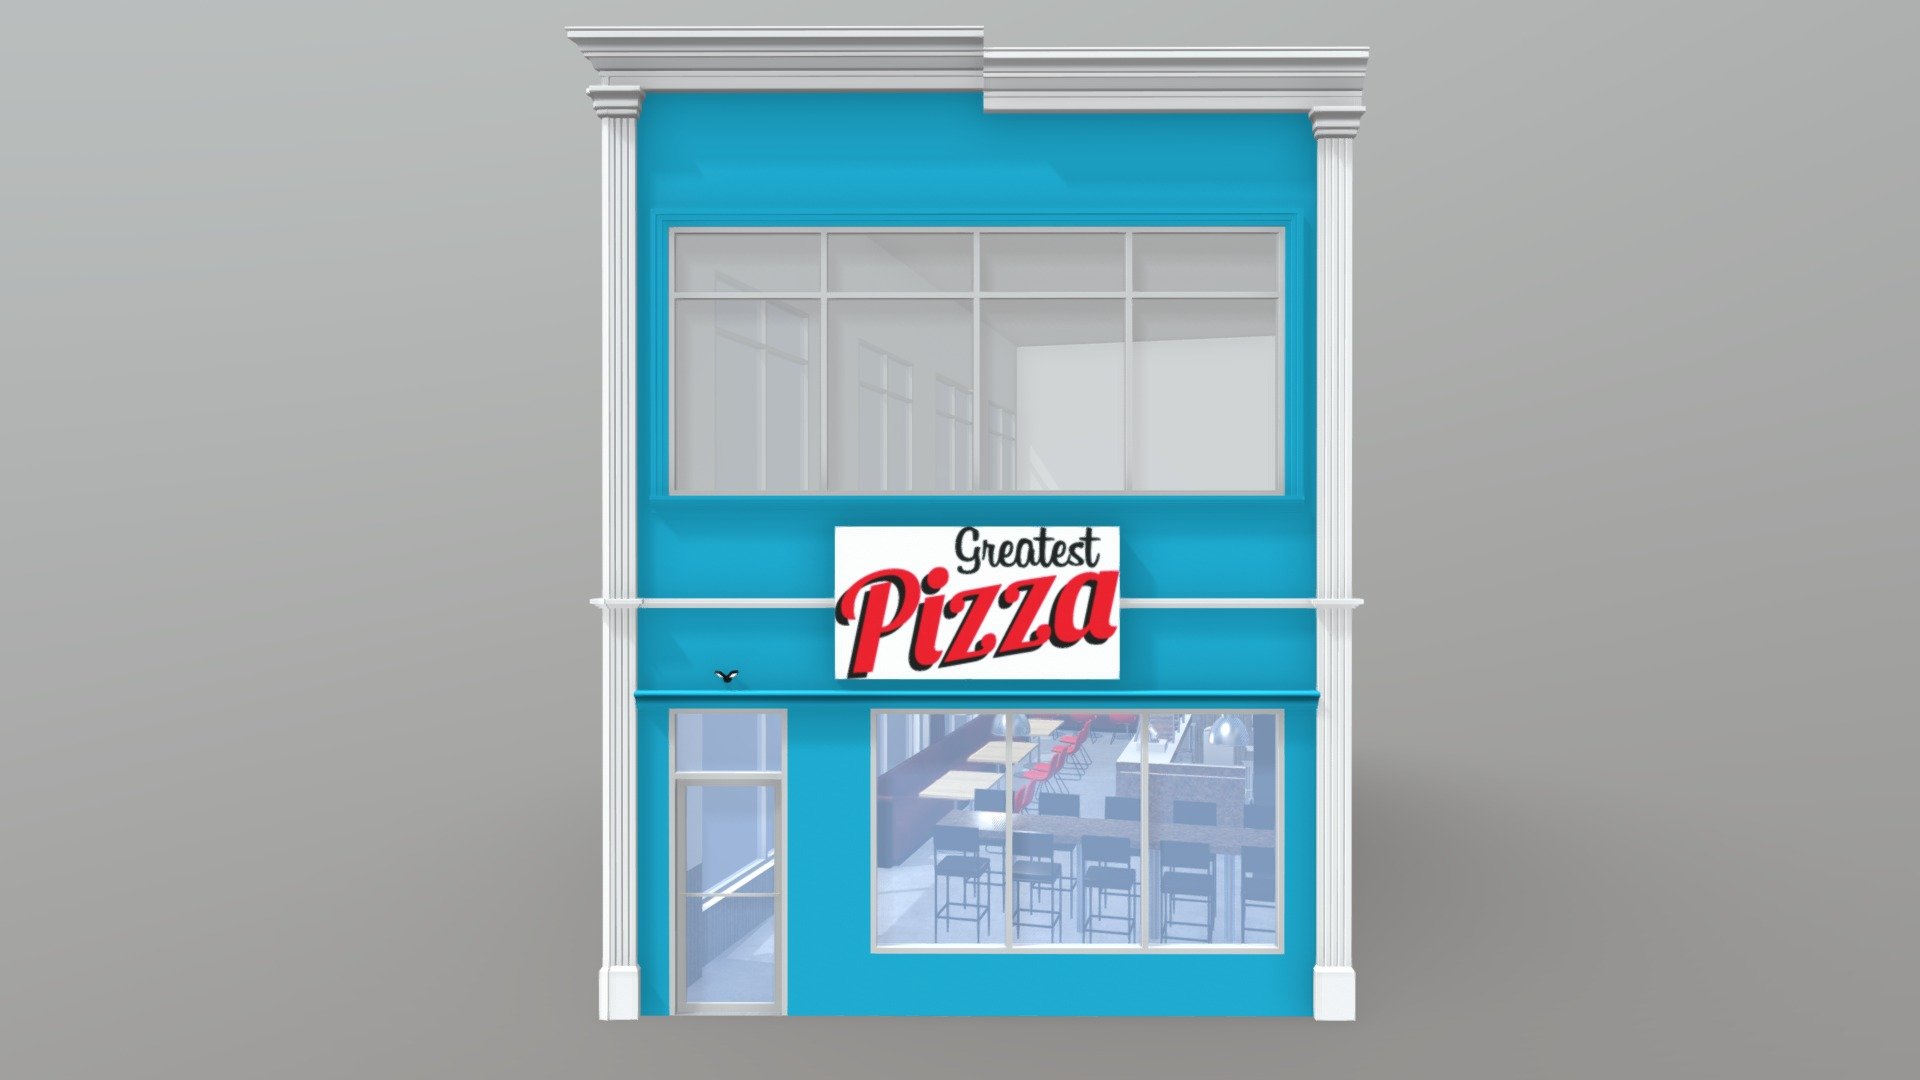 Design for ancmarketing
Design by: reinald_id - 1 - Pizzeria - 3D model by ancmarketingpartner 3d model